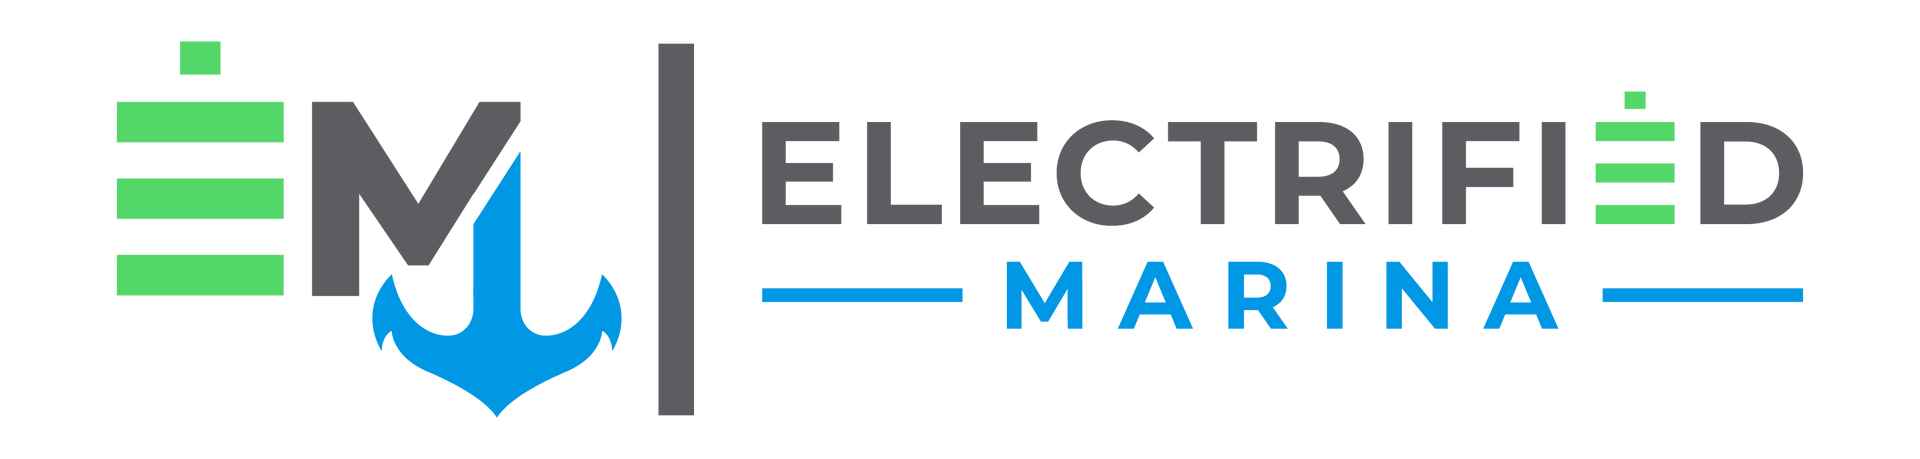 Electrified Marina